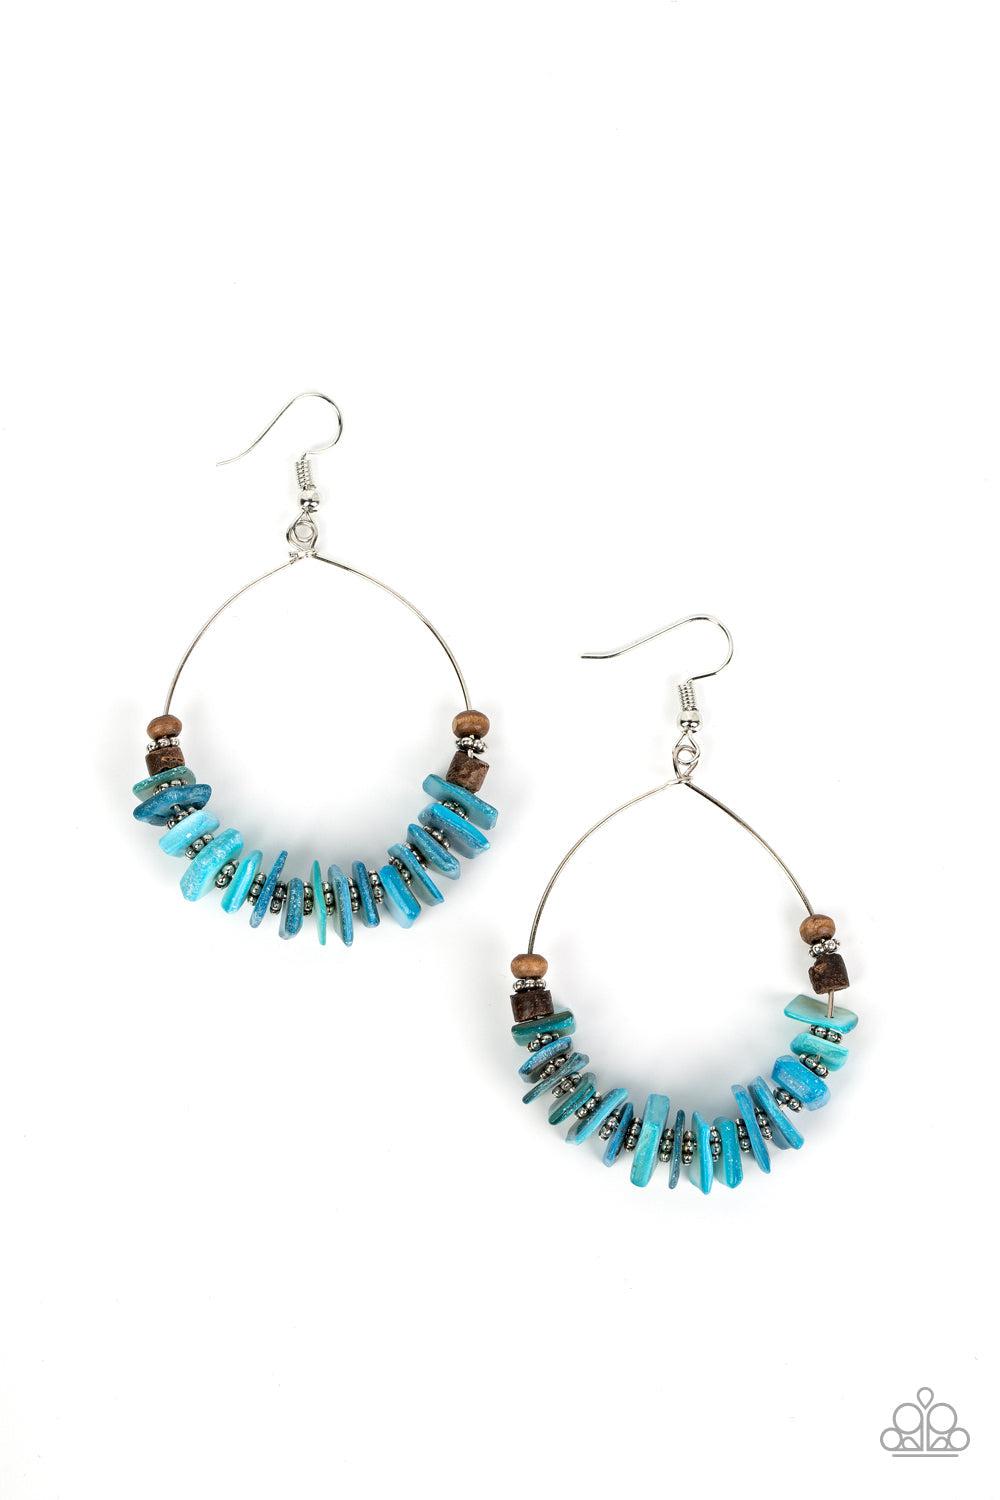 Hawaiian Kiss Blue Pebble Earrings - Paparazzi Accessories- lightbox - CarasShop.com - $5 Jewelry by Cara Jewels